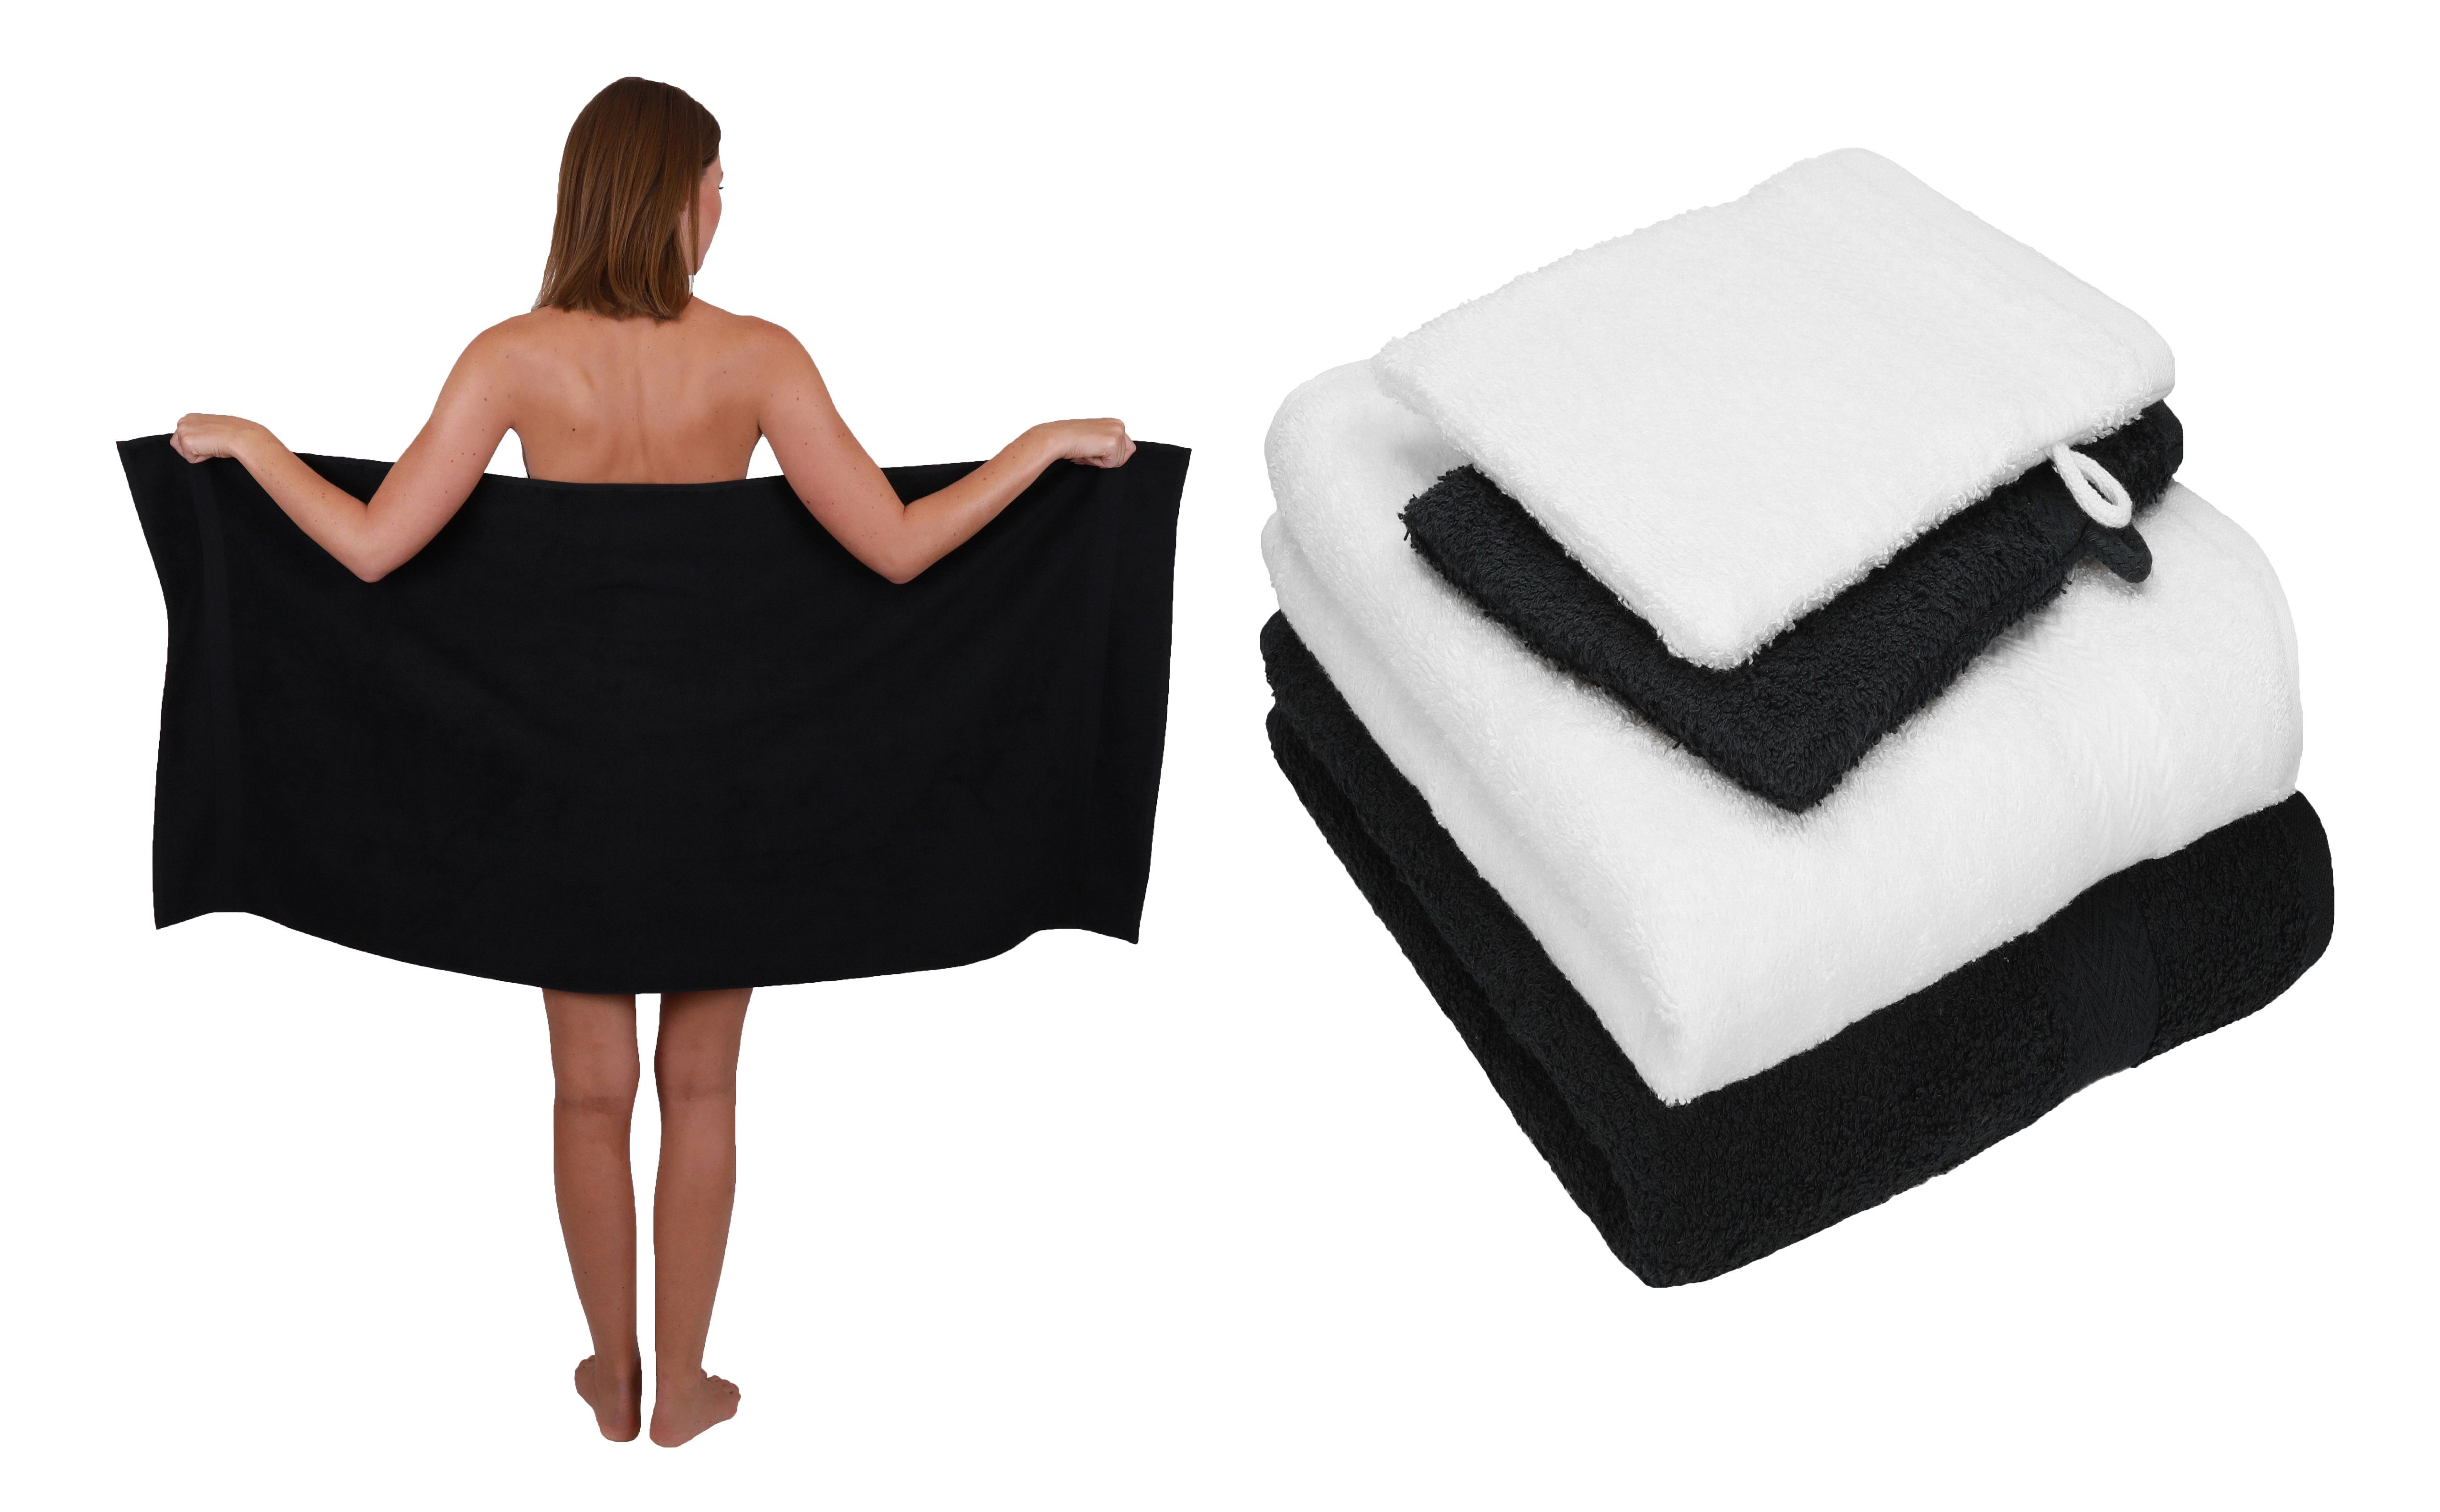 Betz Handtuch Set 5 Duschtuch Pack 100% 2 TLG. Baumwolle 100% 2 Handtuch Single Baumwolle Waschhandschuhe, 1 Set schwarz-weiß Handtücher